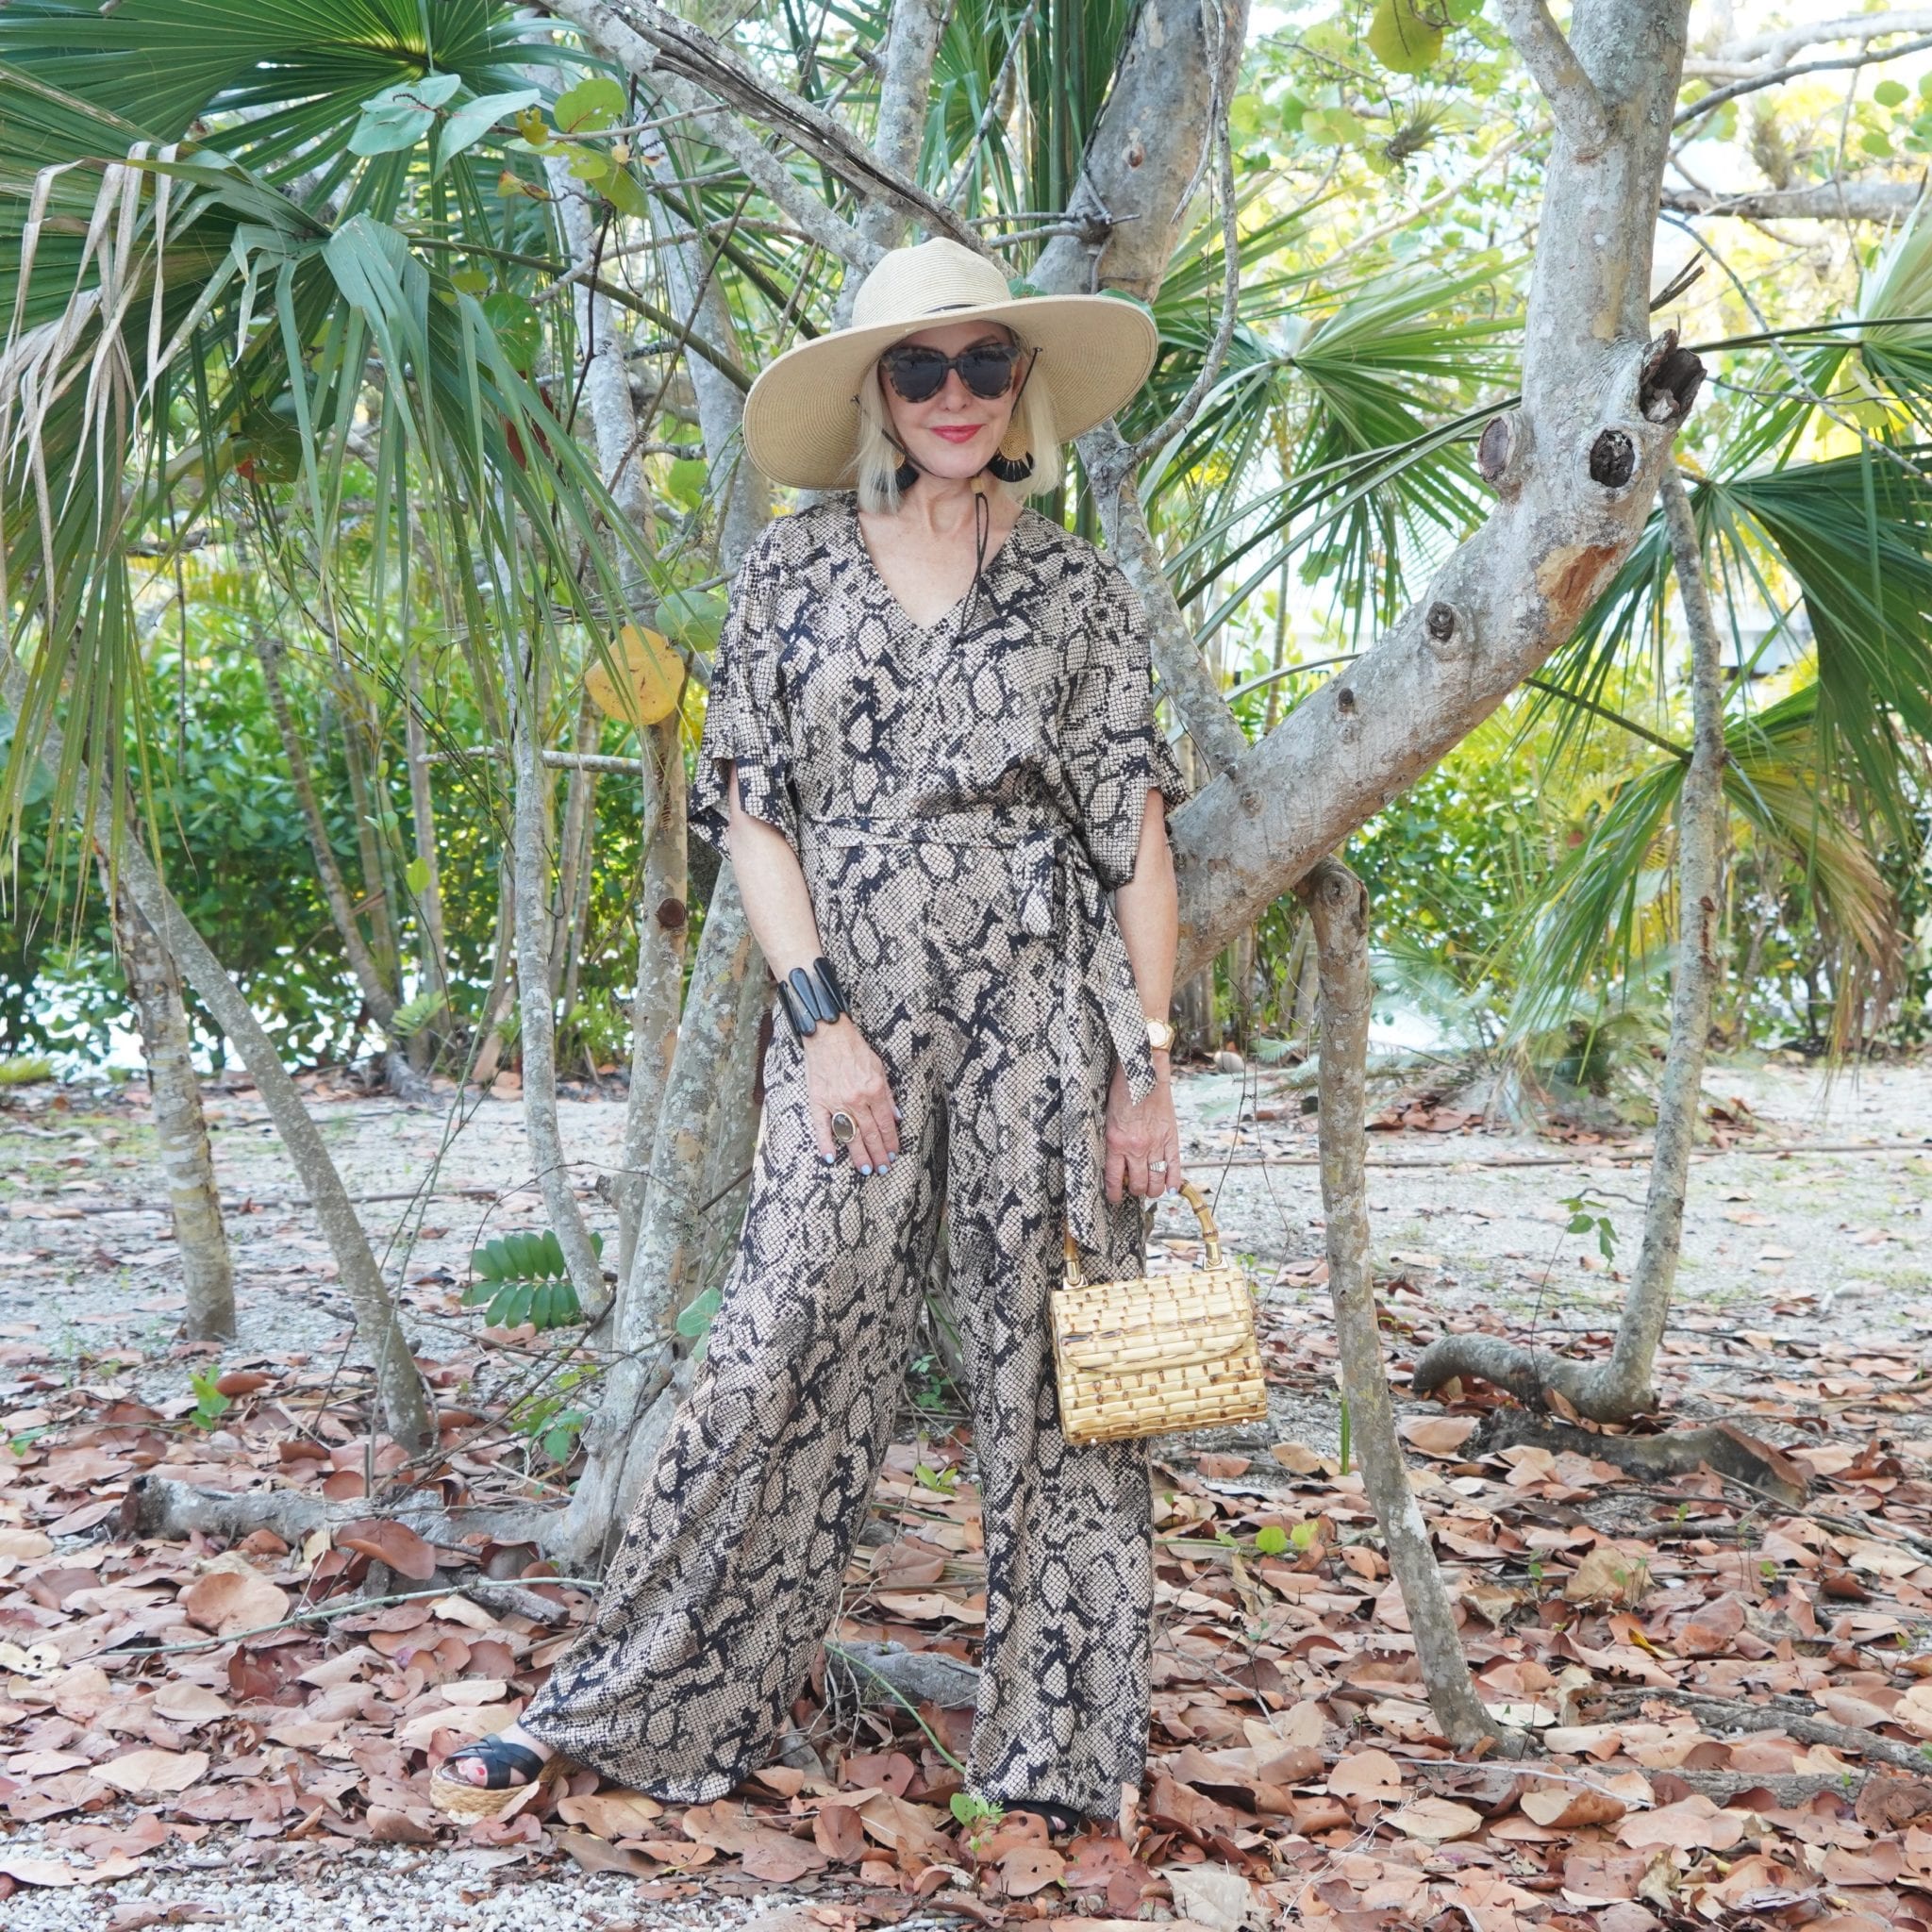 snakeskin print jumpsuit, bamboo bag, black wedge sandals, sunglasses, tropical setting